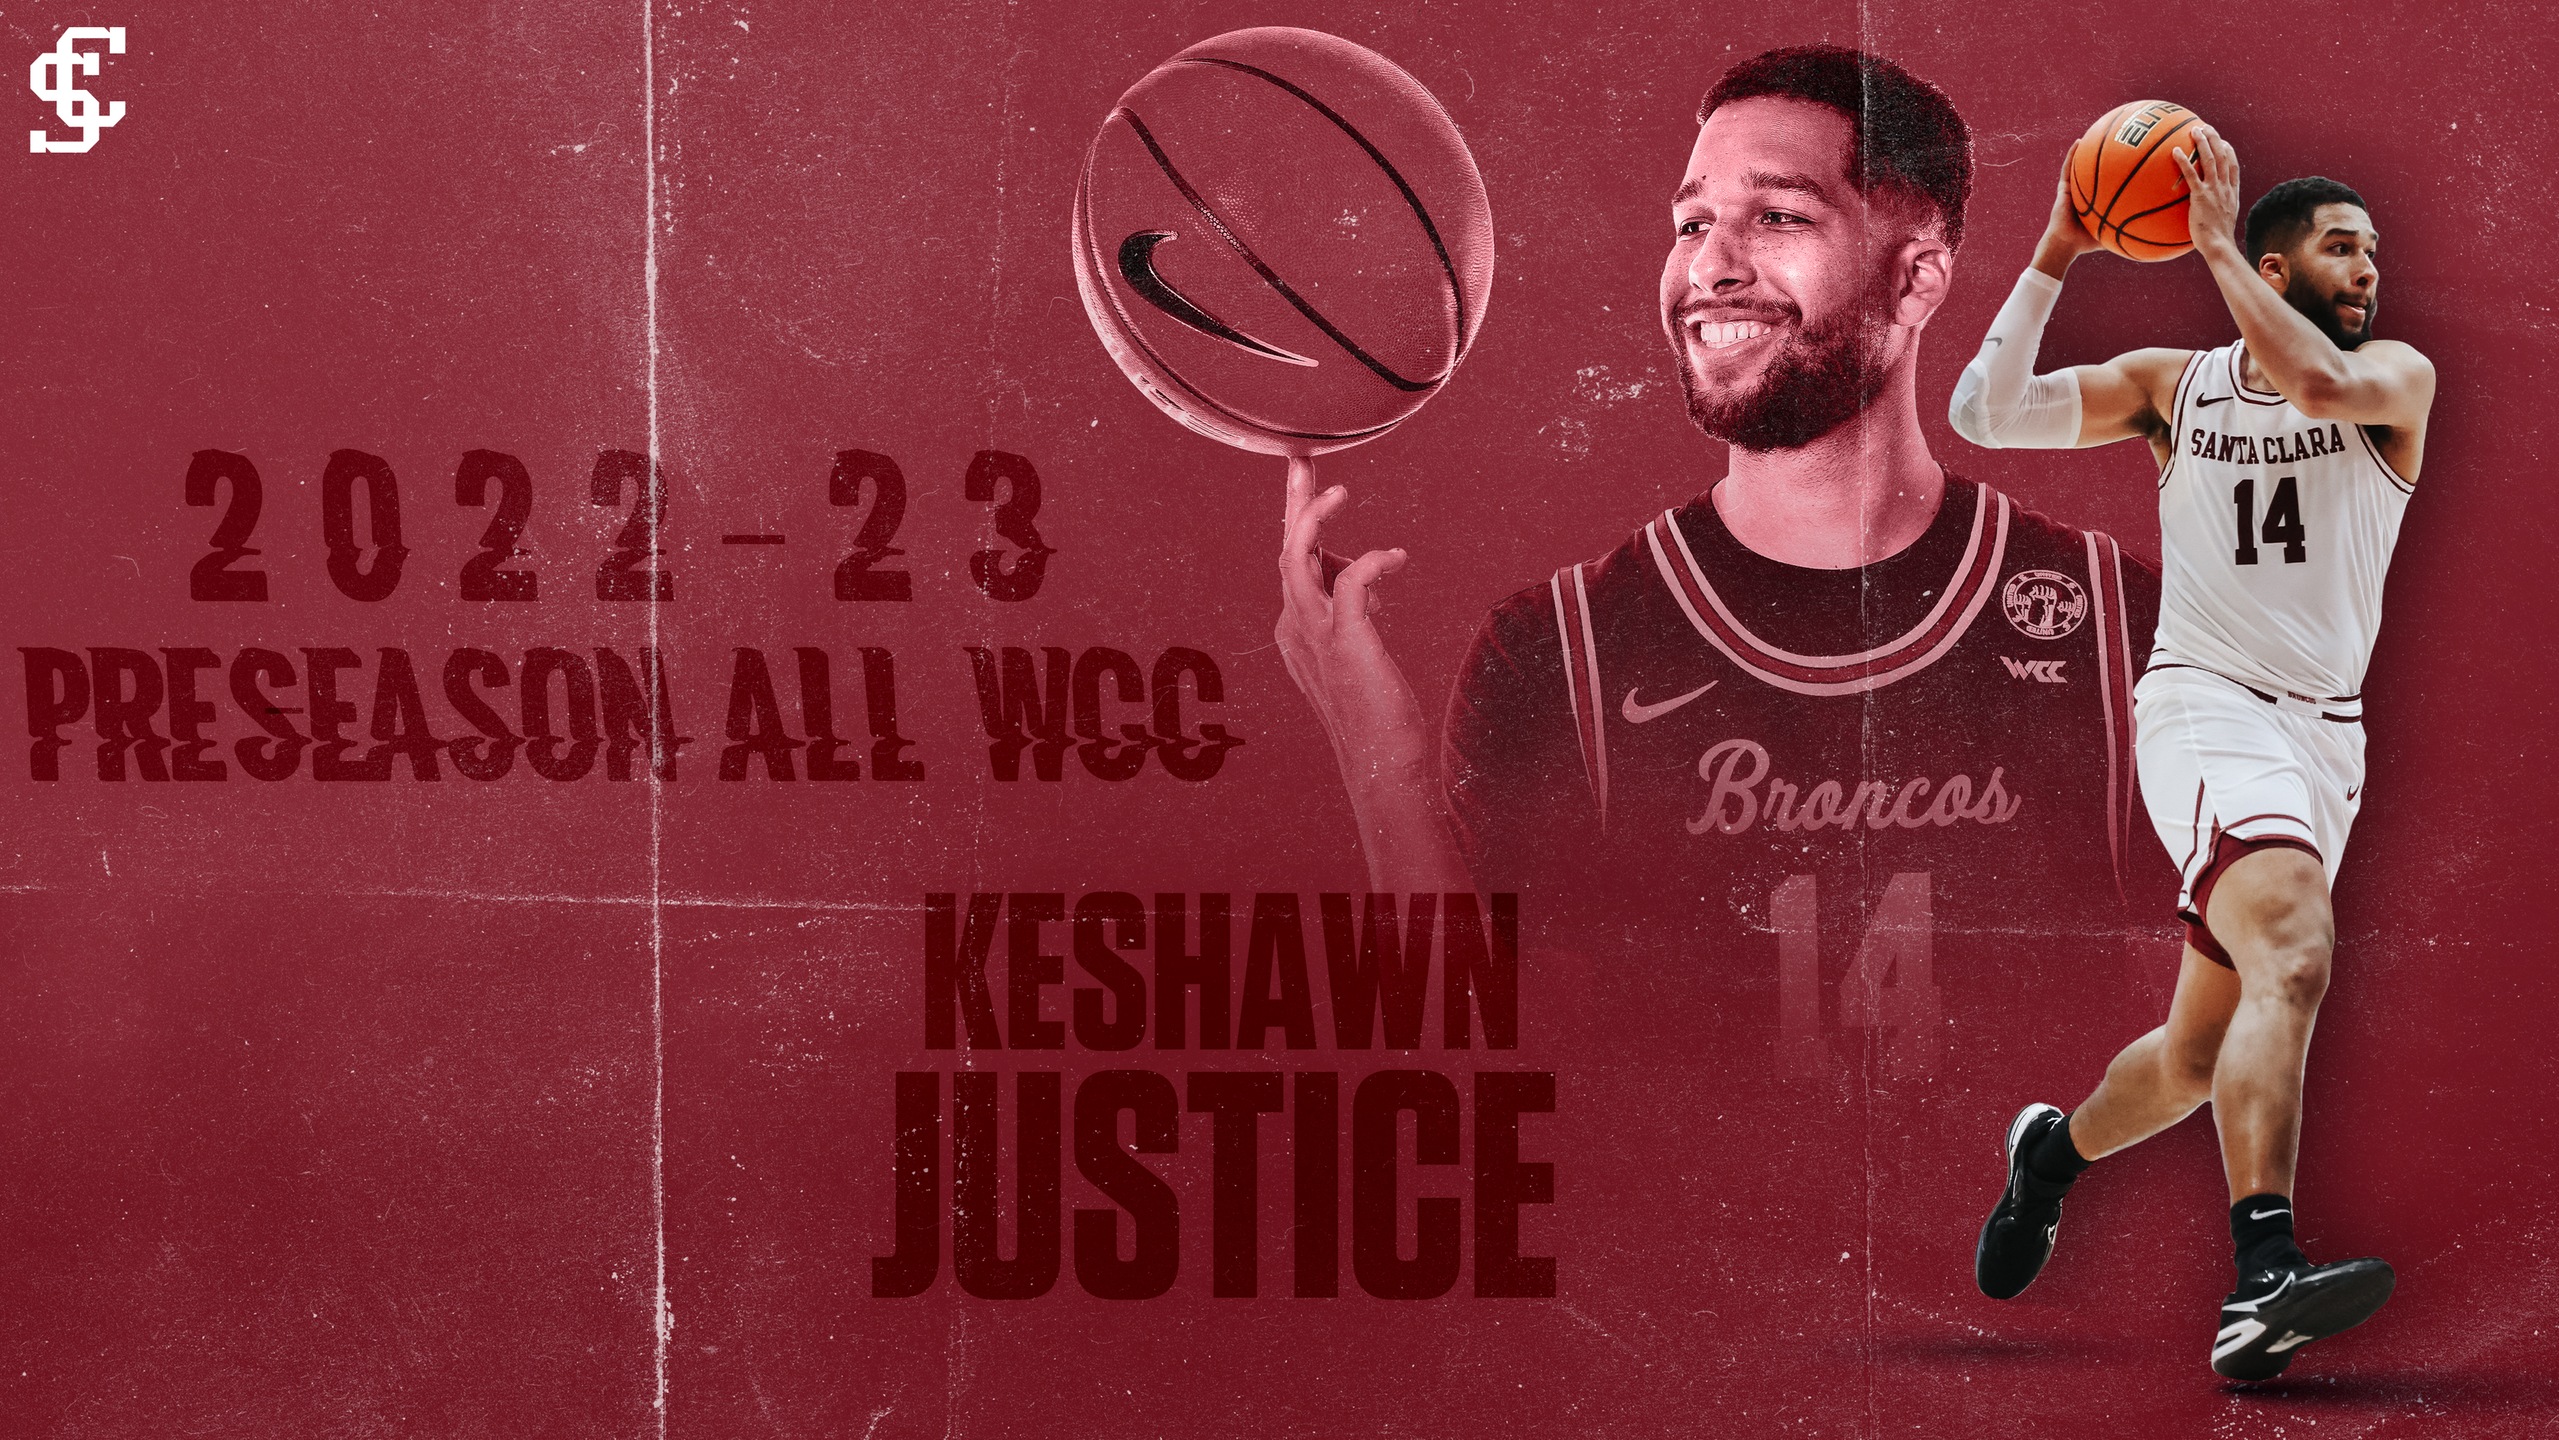 Keshawn Justice Named Preseason All-WCC